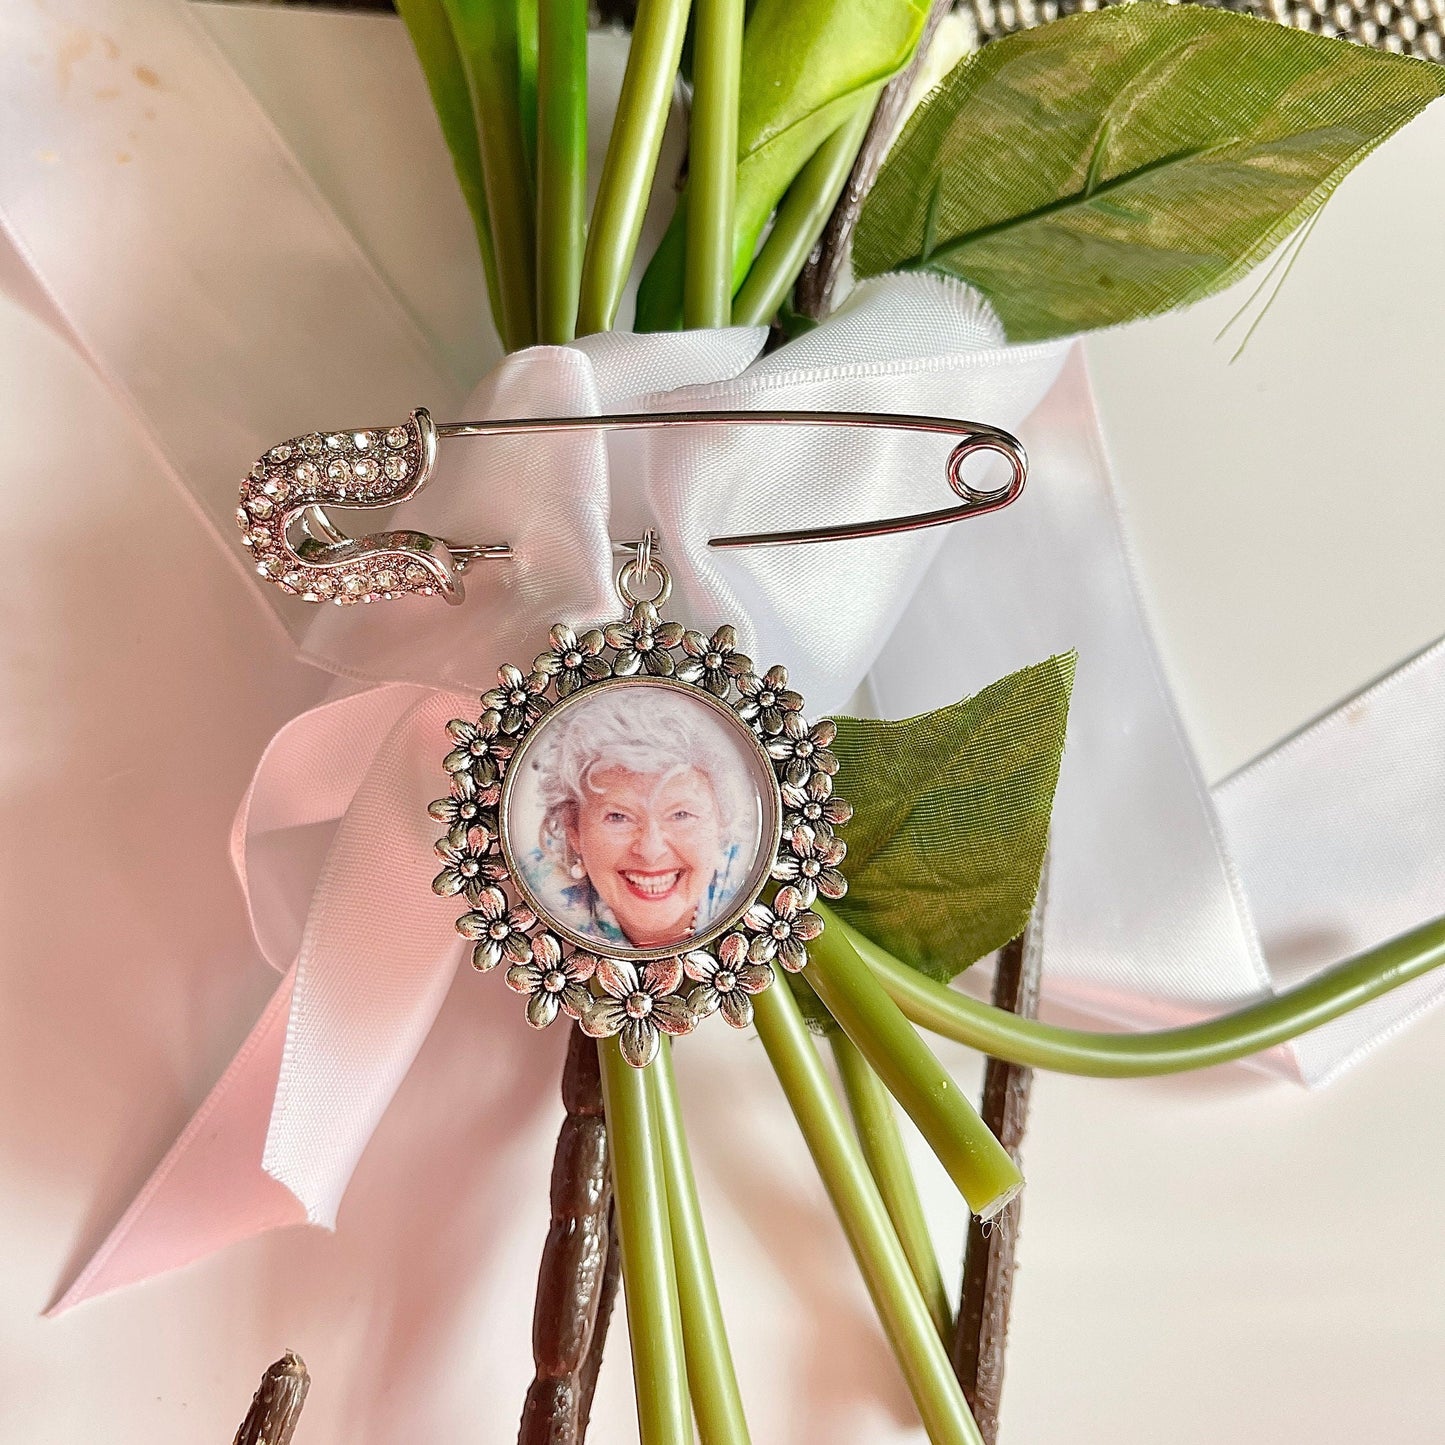 Pin on Wedding flowers